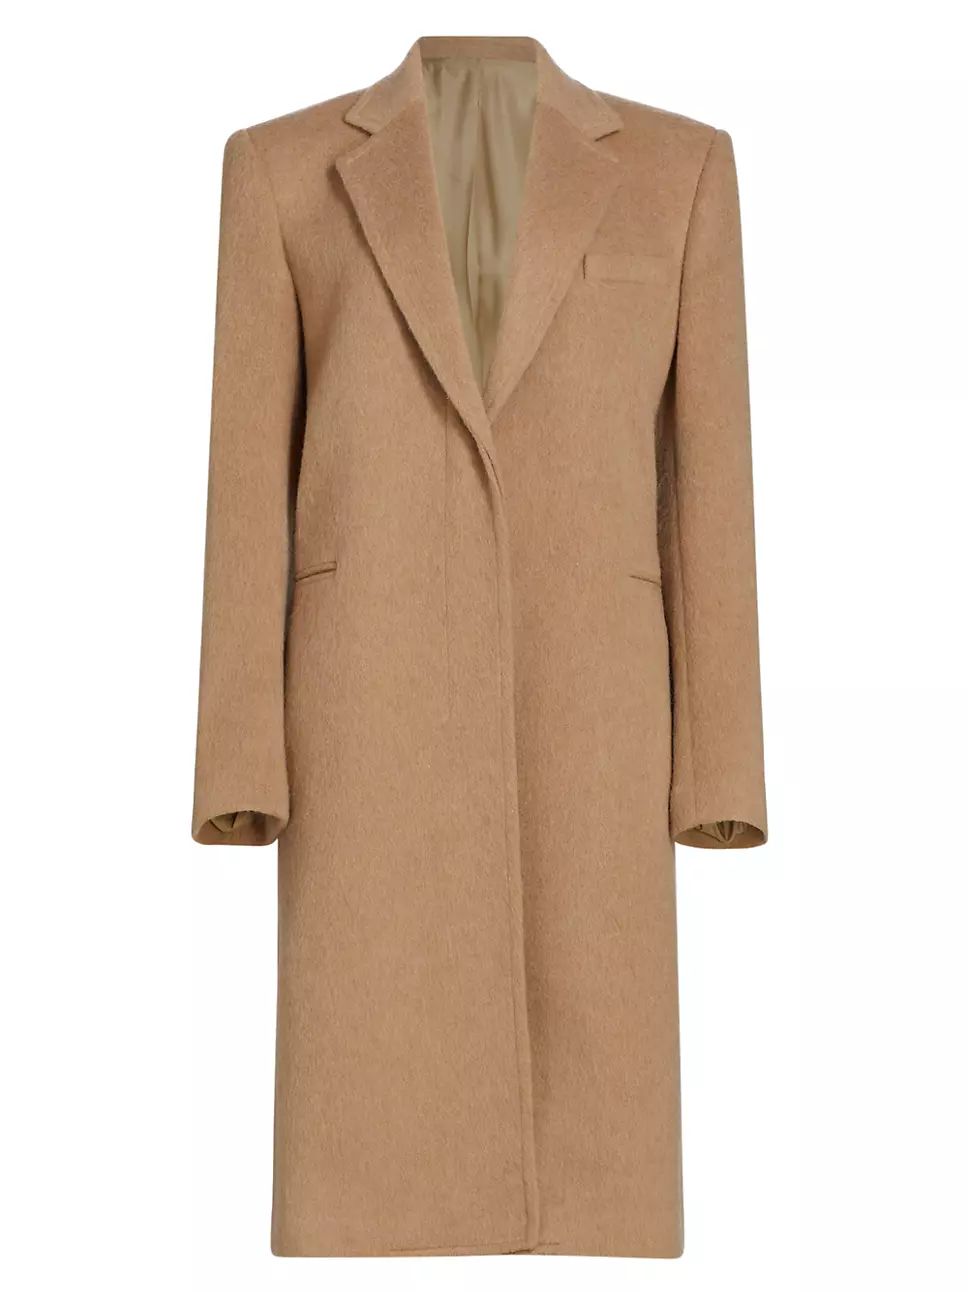 Helmut Lang Tailored Wool-Blend Coat | Saks Fifth Avenue